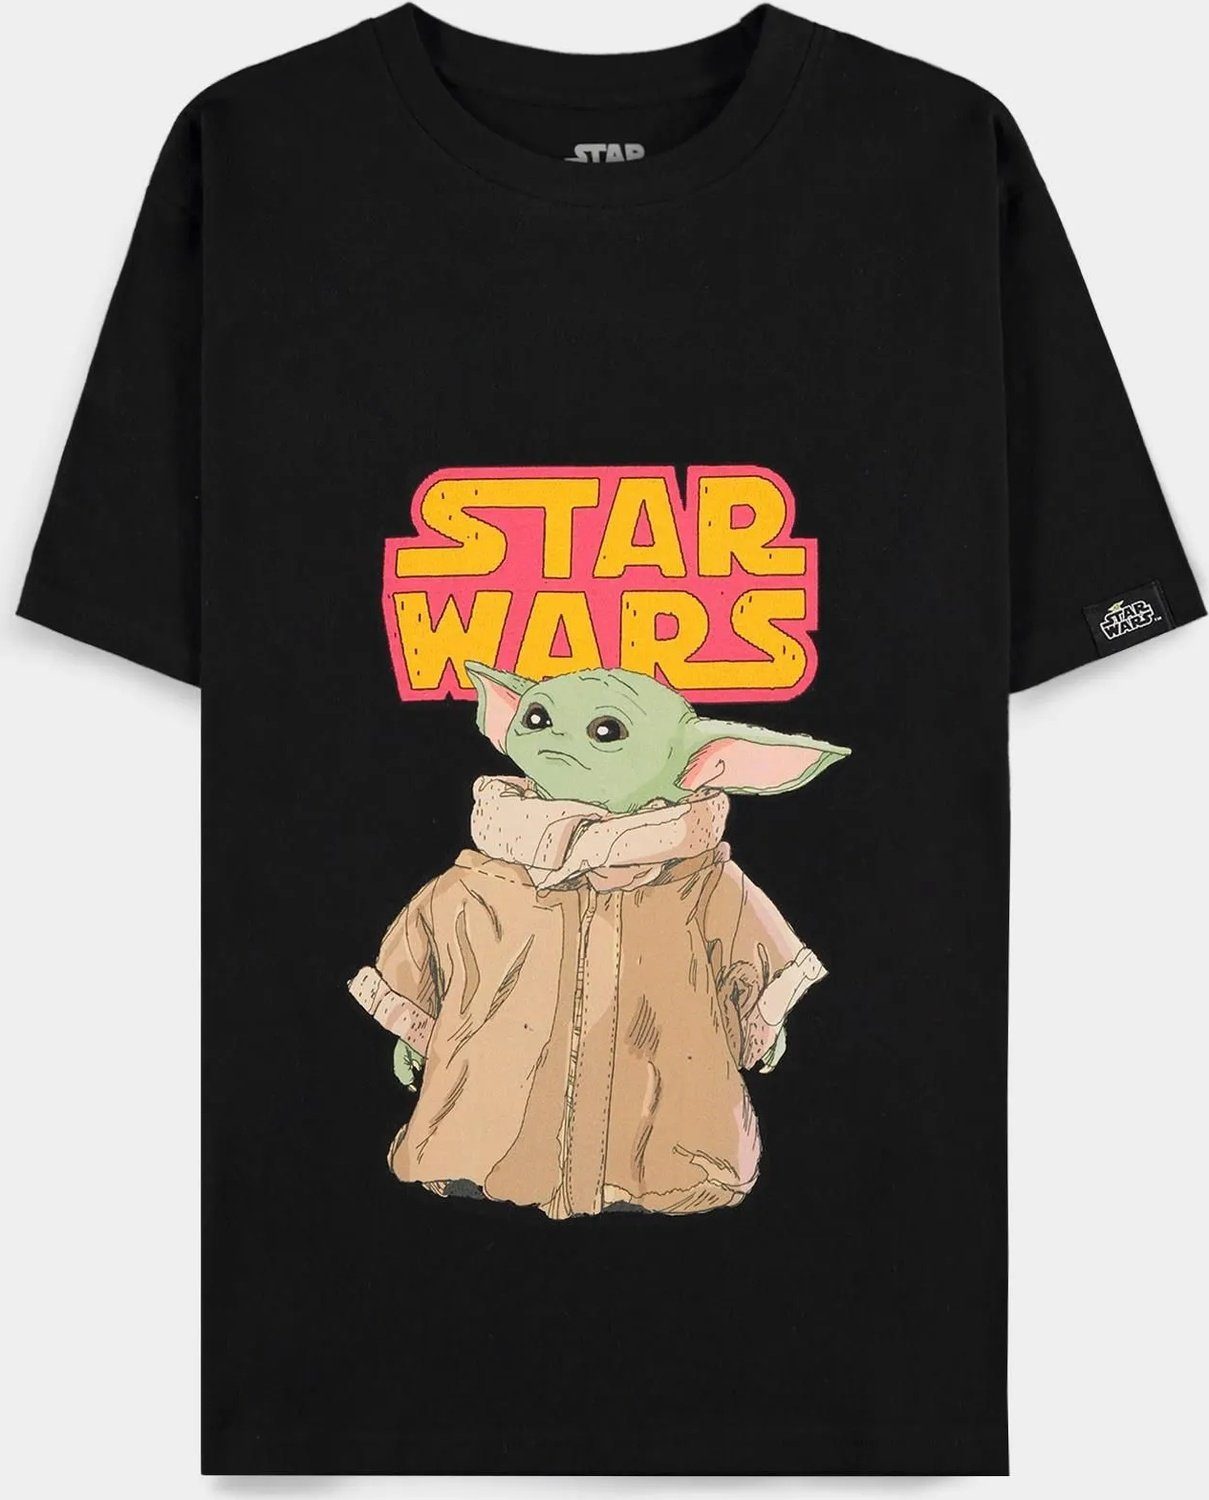 Wars T-Shirt Star